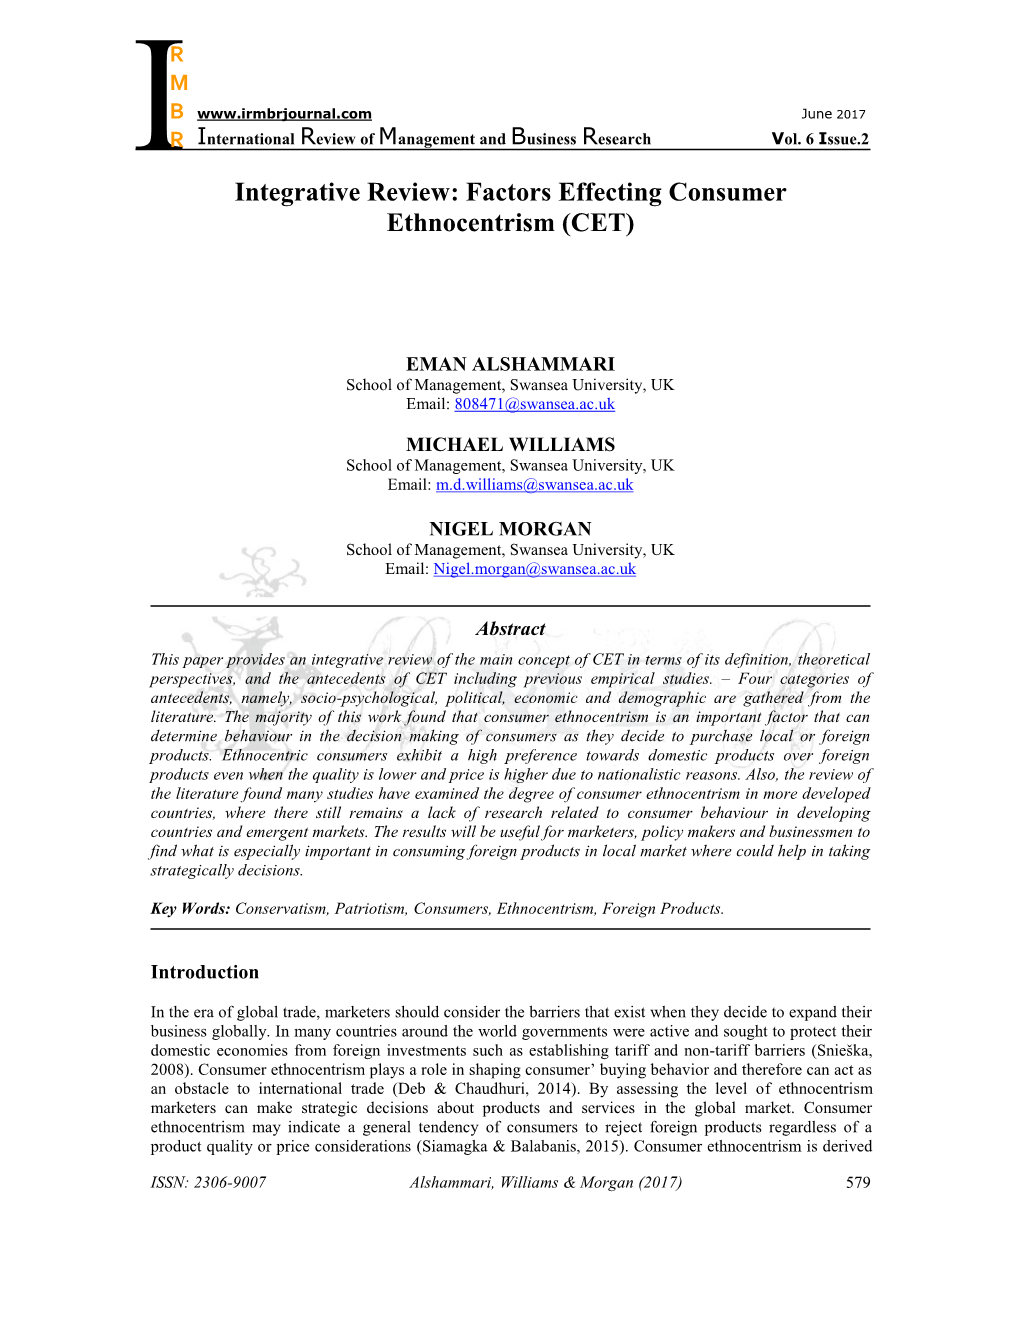 Integrative Review: Factors Effecting Consumer Ethnocentrism (CET)